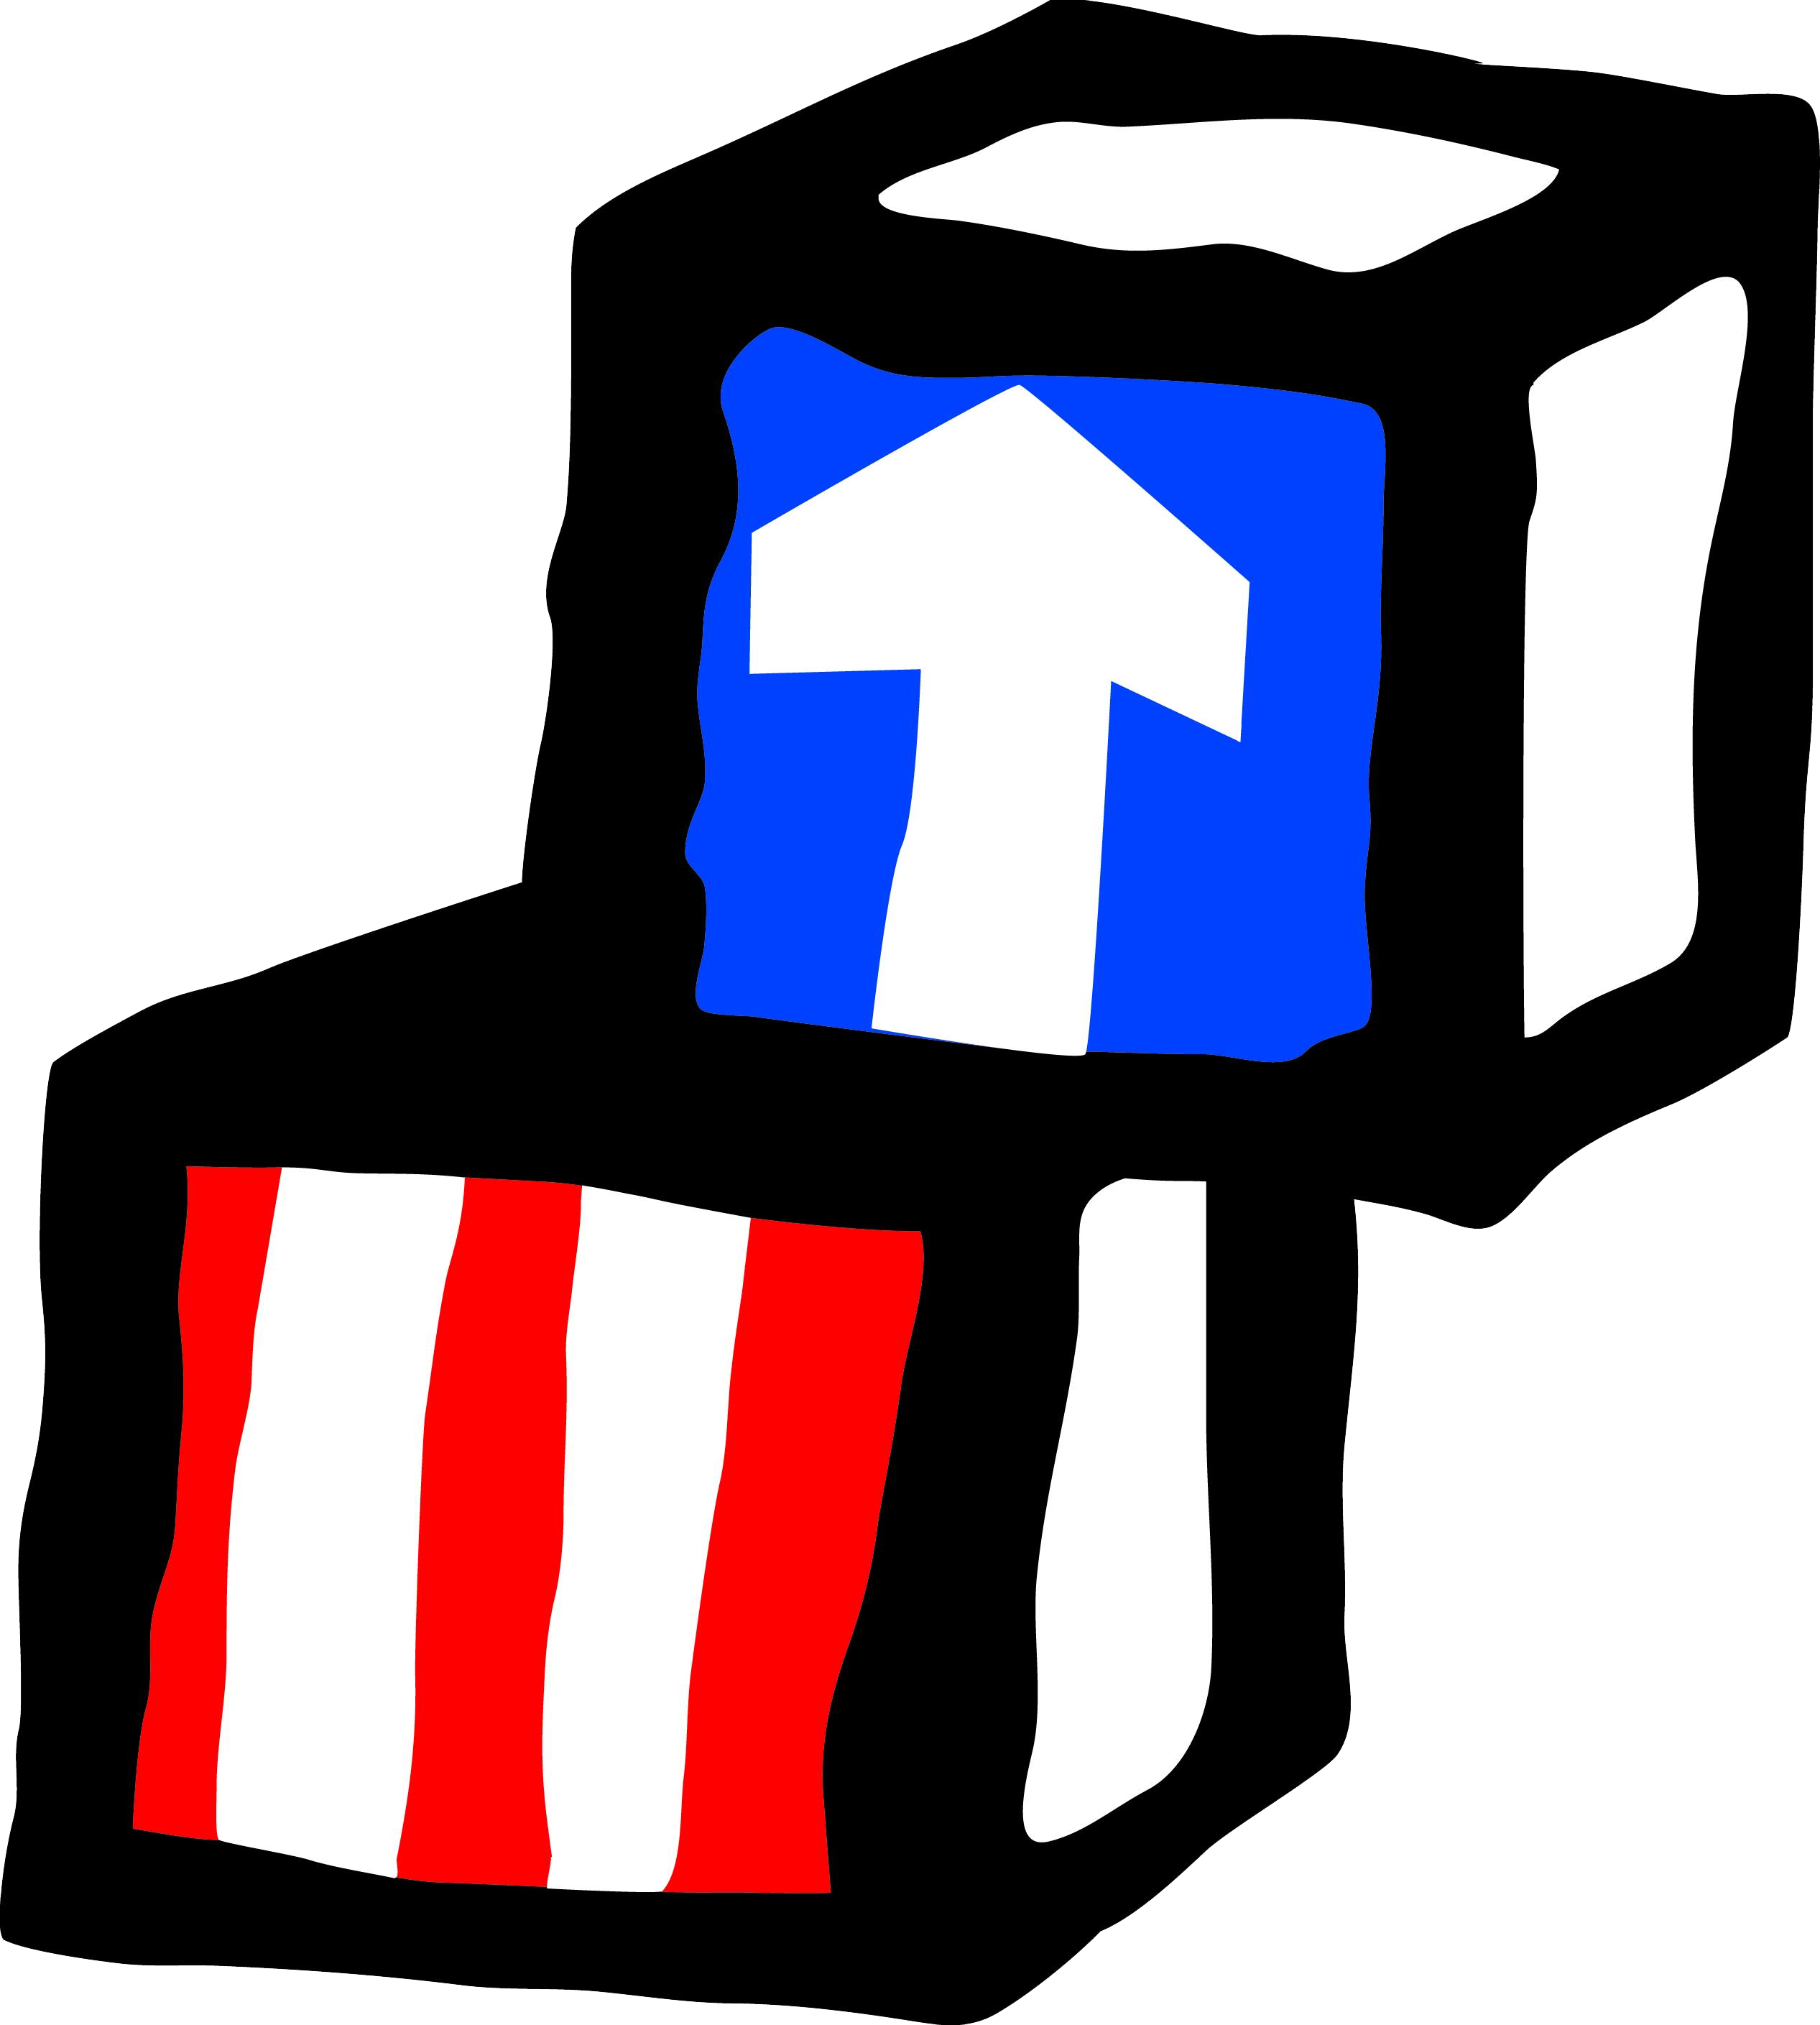 Head Start Logo - Red, white and blue blocks